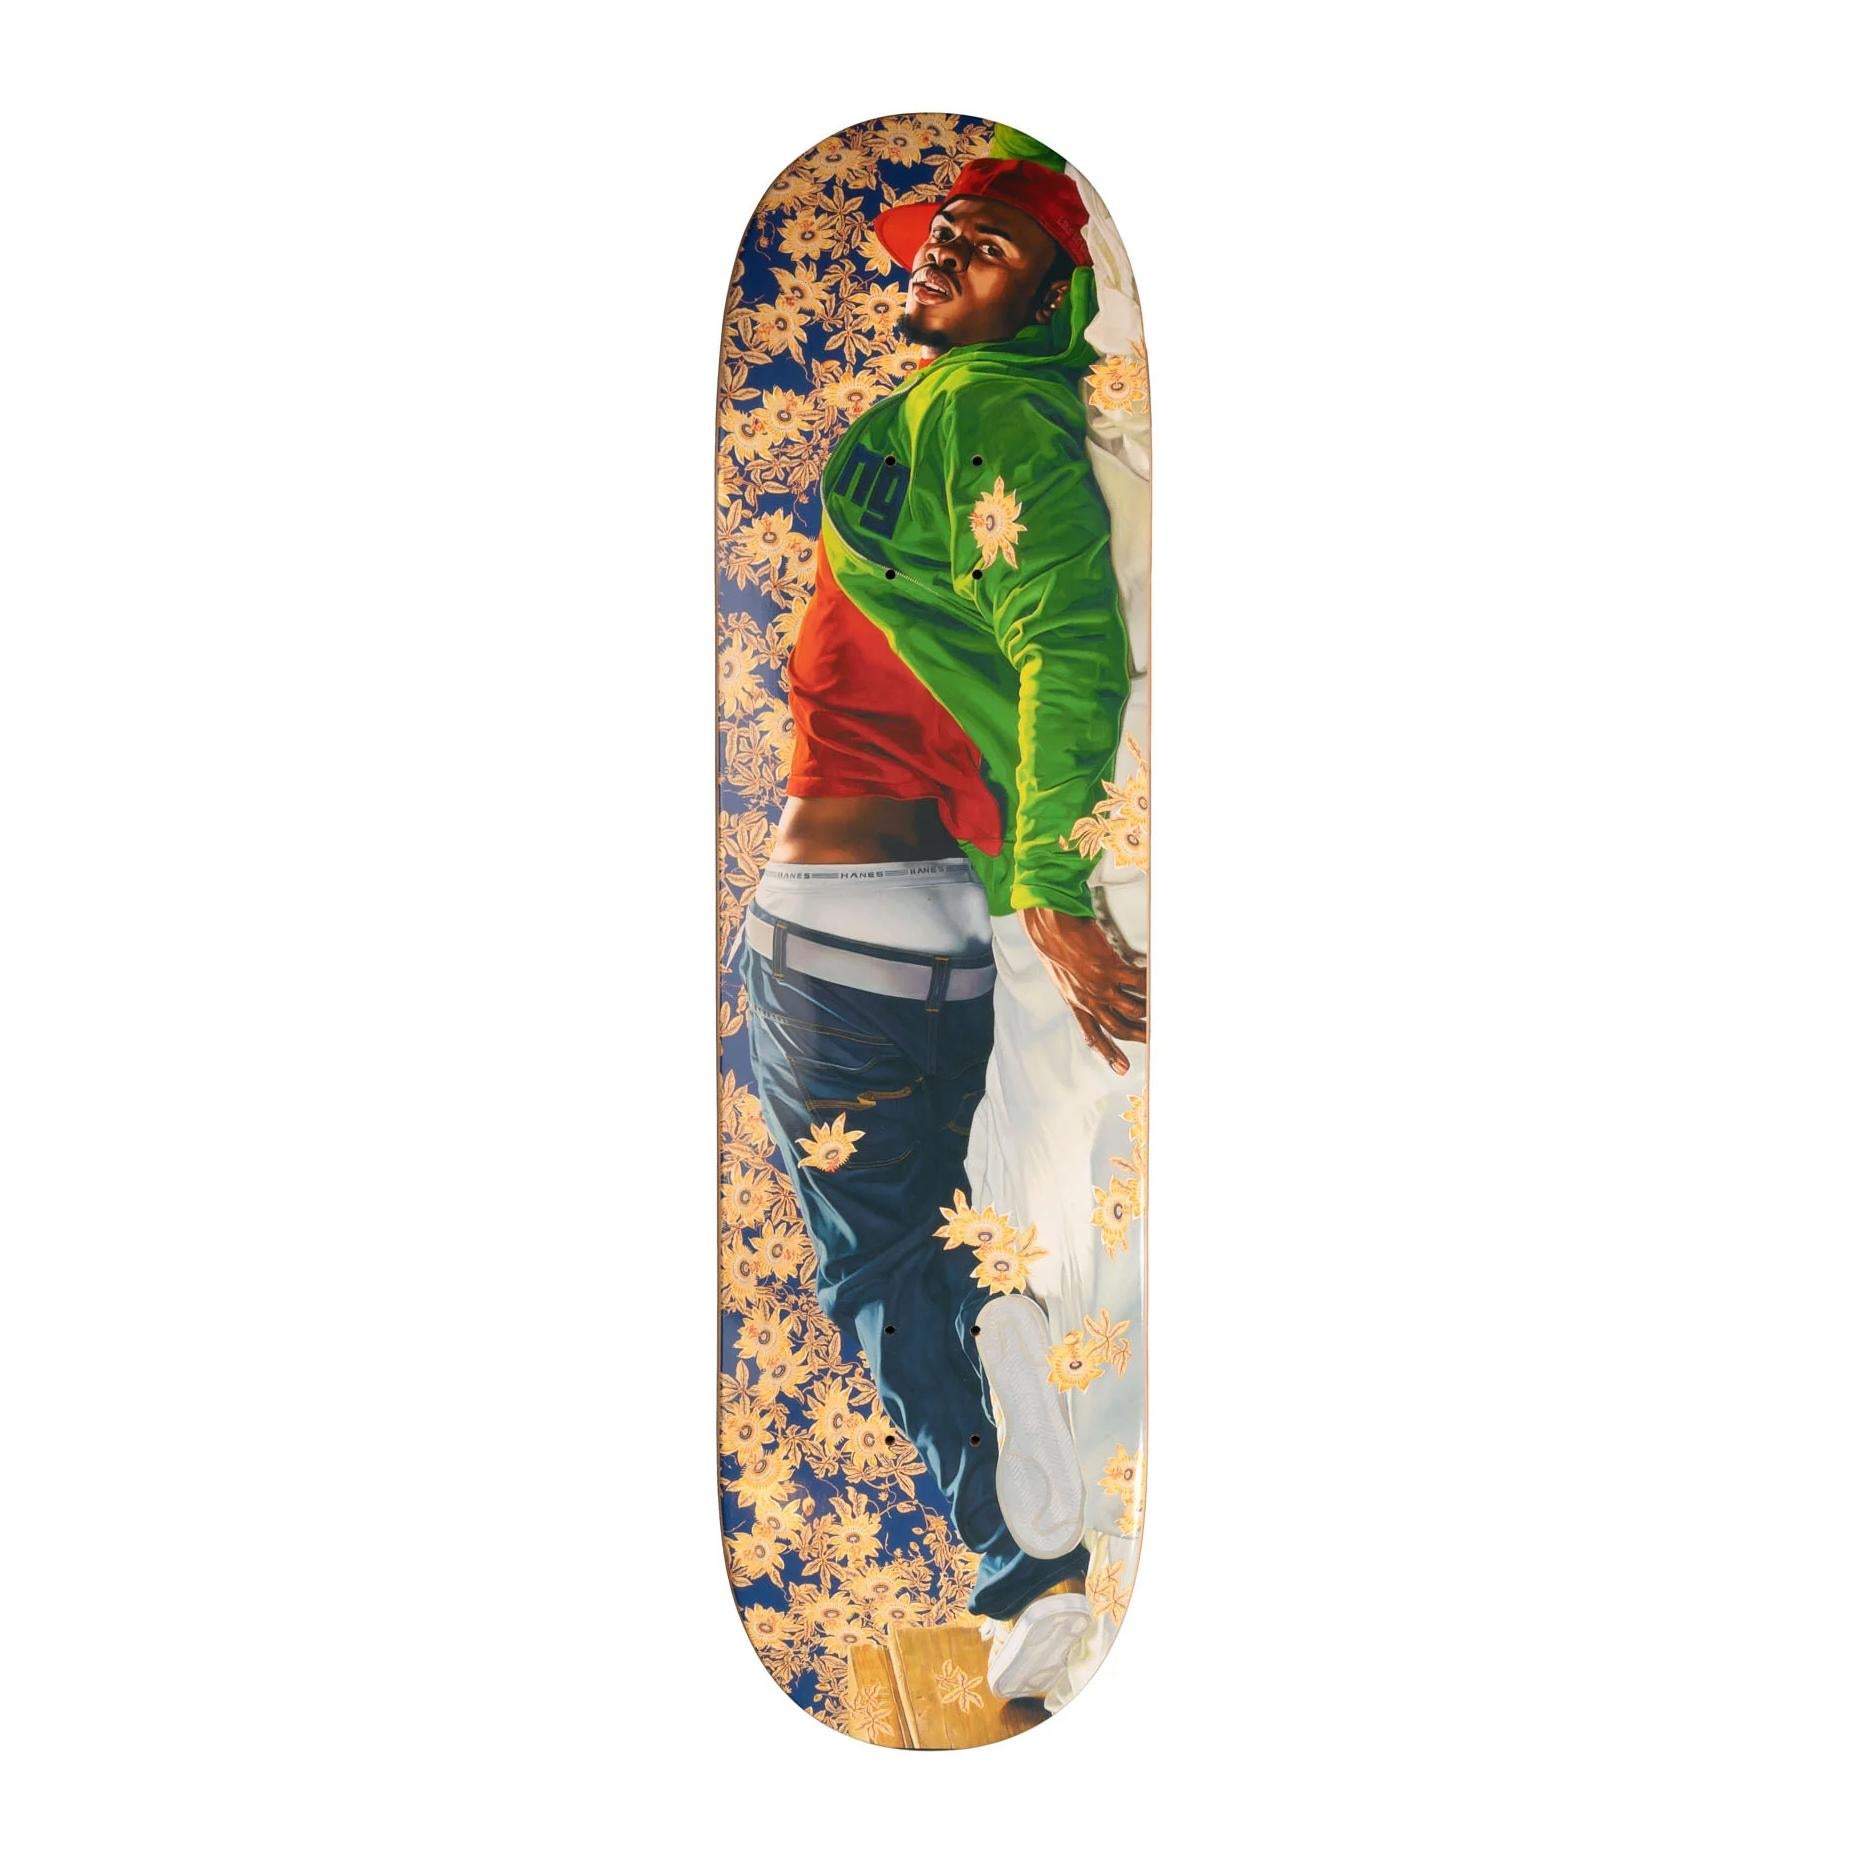 Femme Piquée Skateboard Deck by Kehinde Wiley For Sale